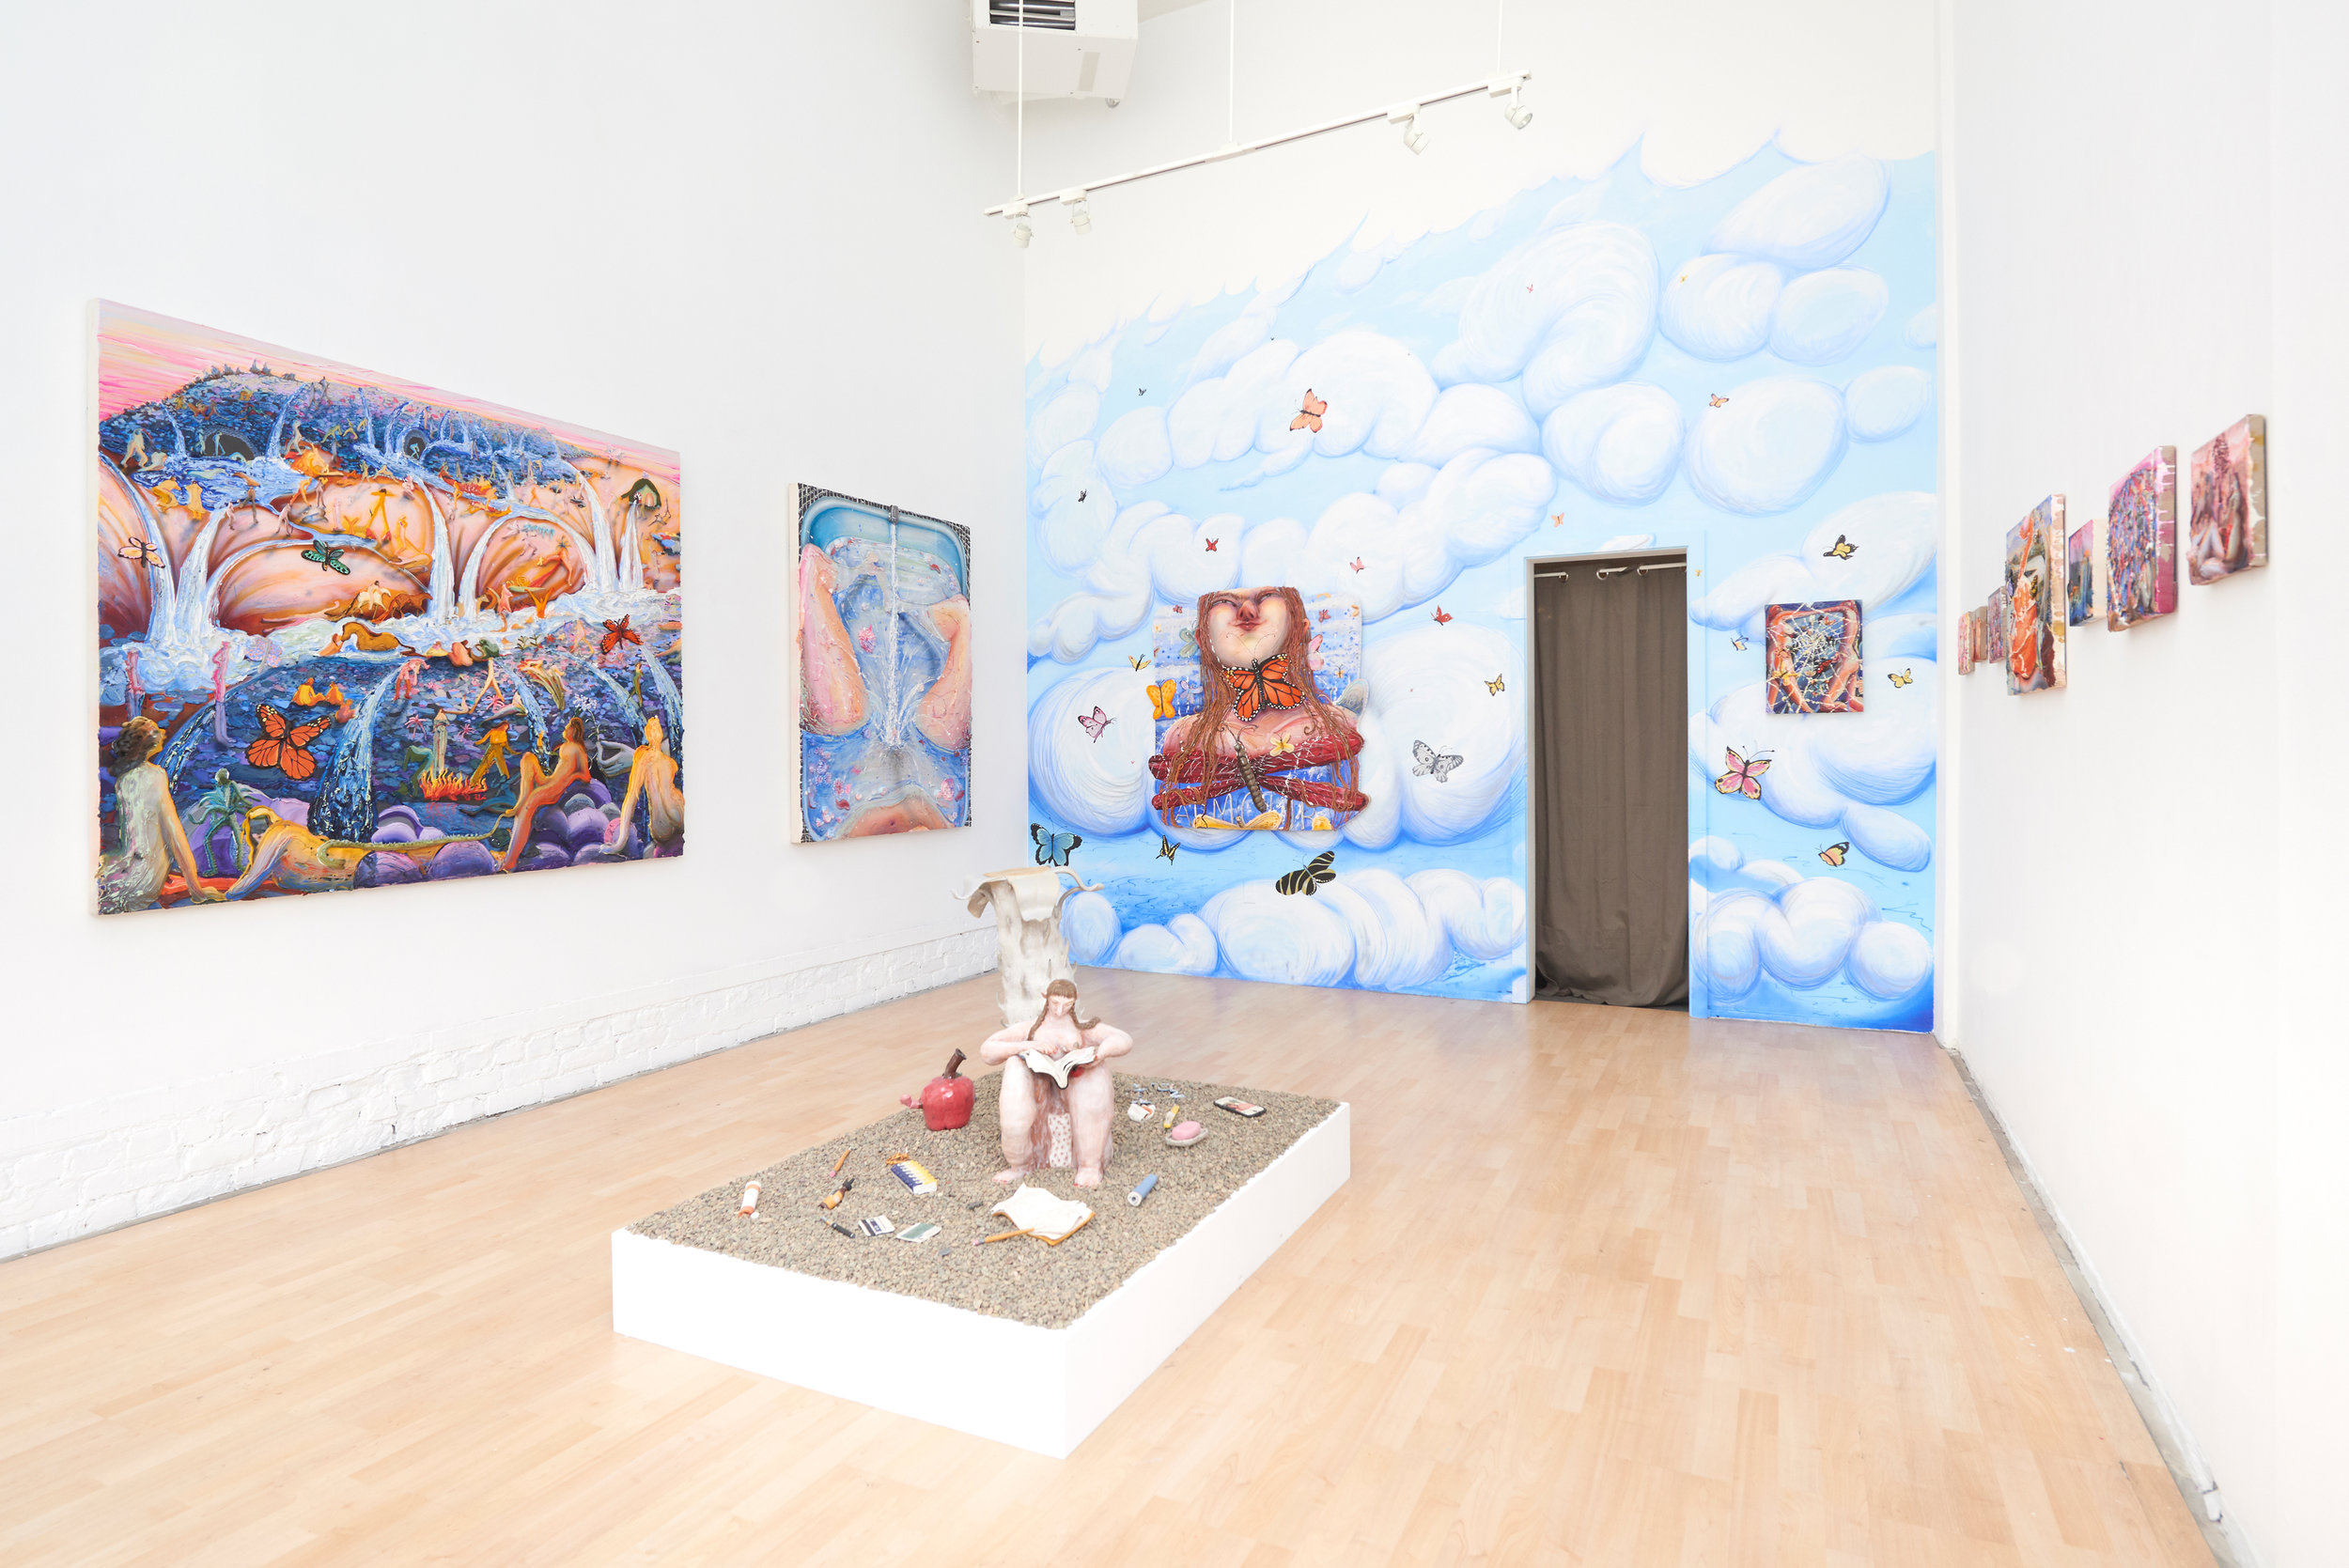  Installation view from “Pith” at Hashimoto Contemporary, 2018, San Francisco, California.  